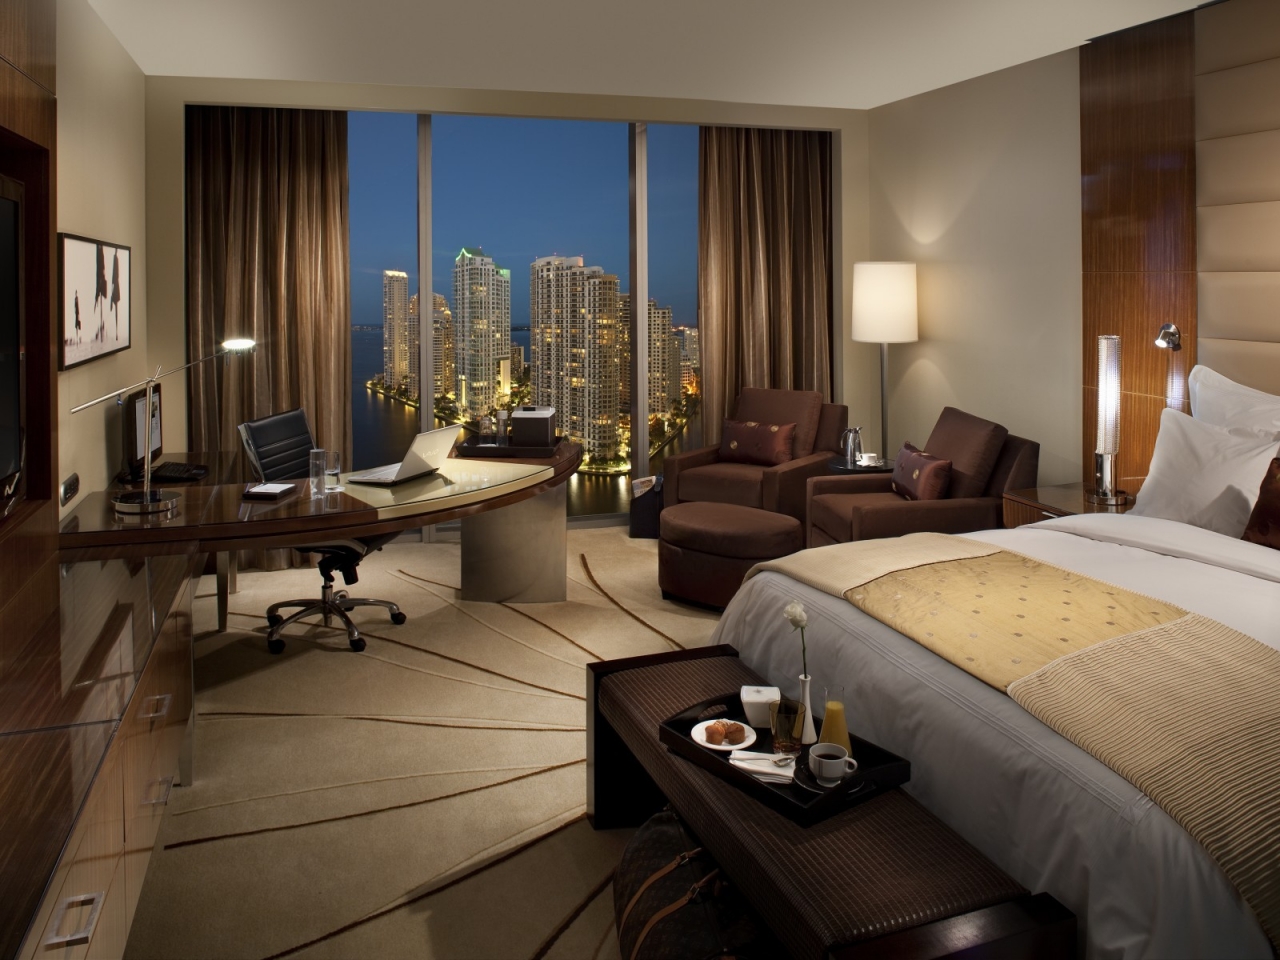 Miami Florida Hotel Room for 1280 x 960 resolution